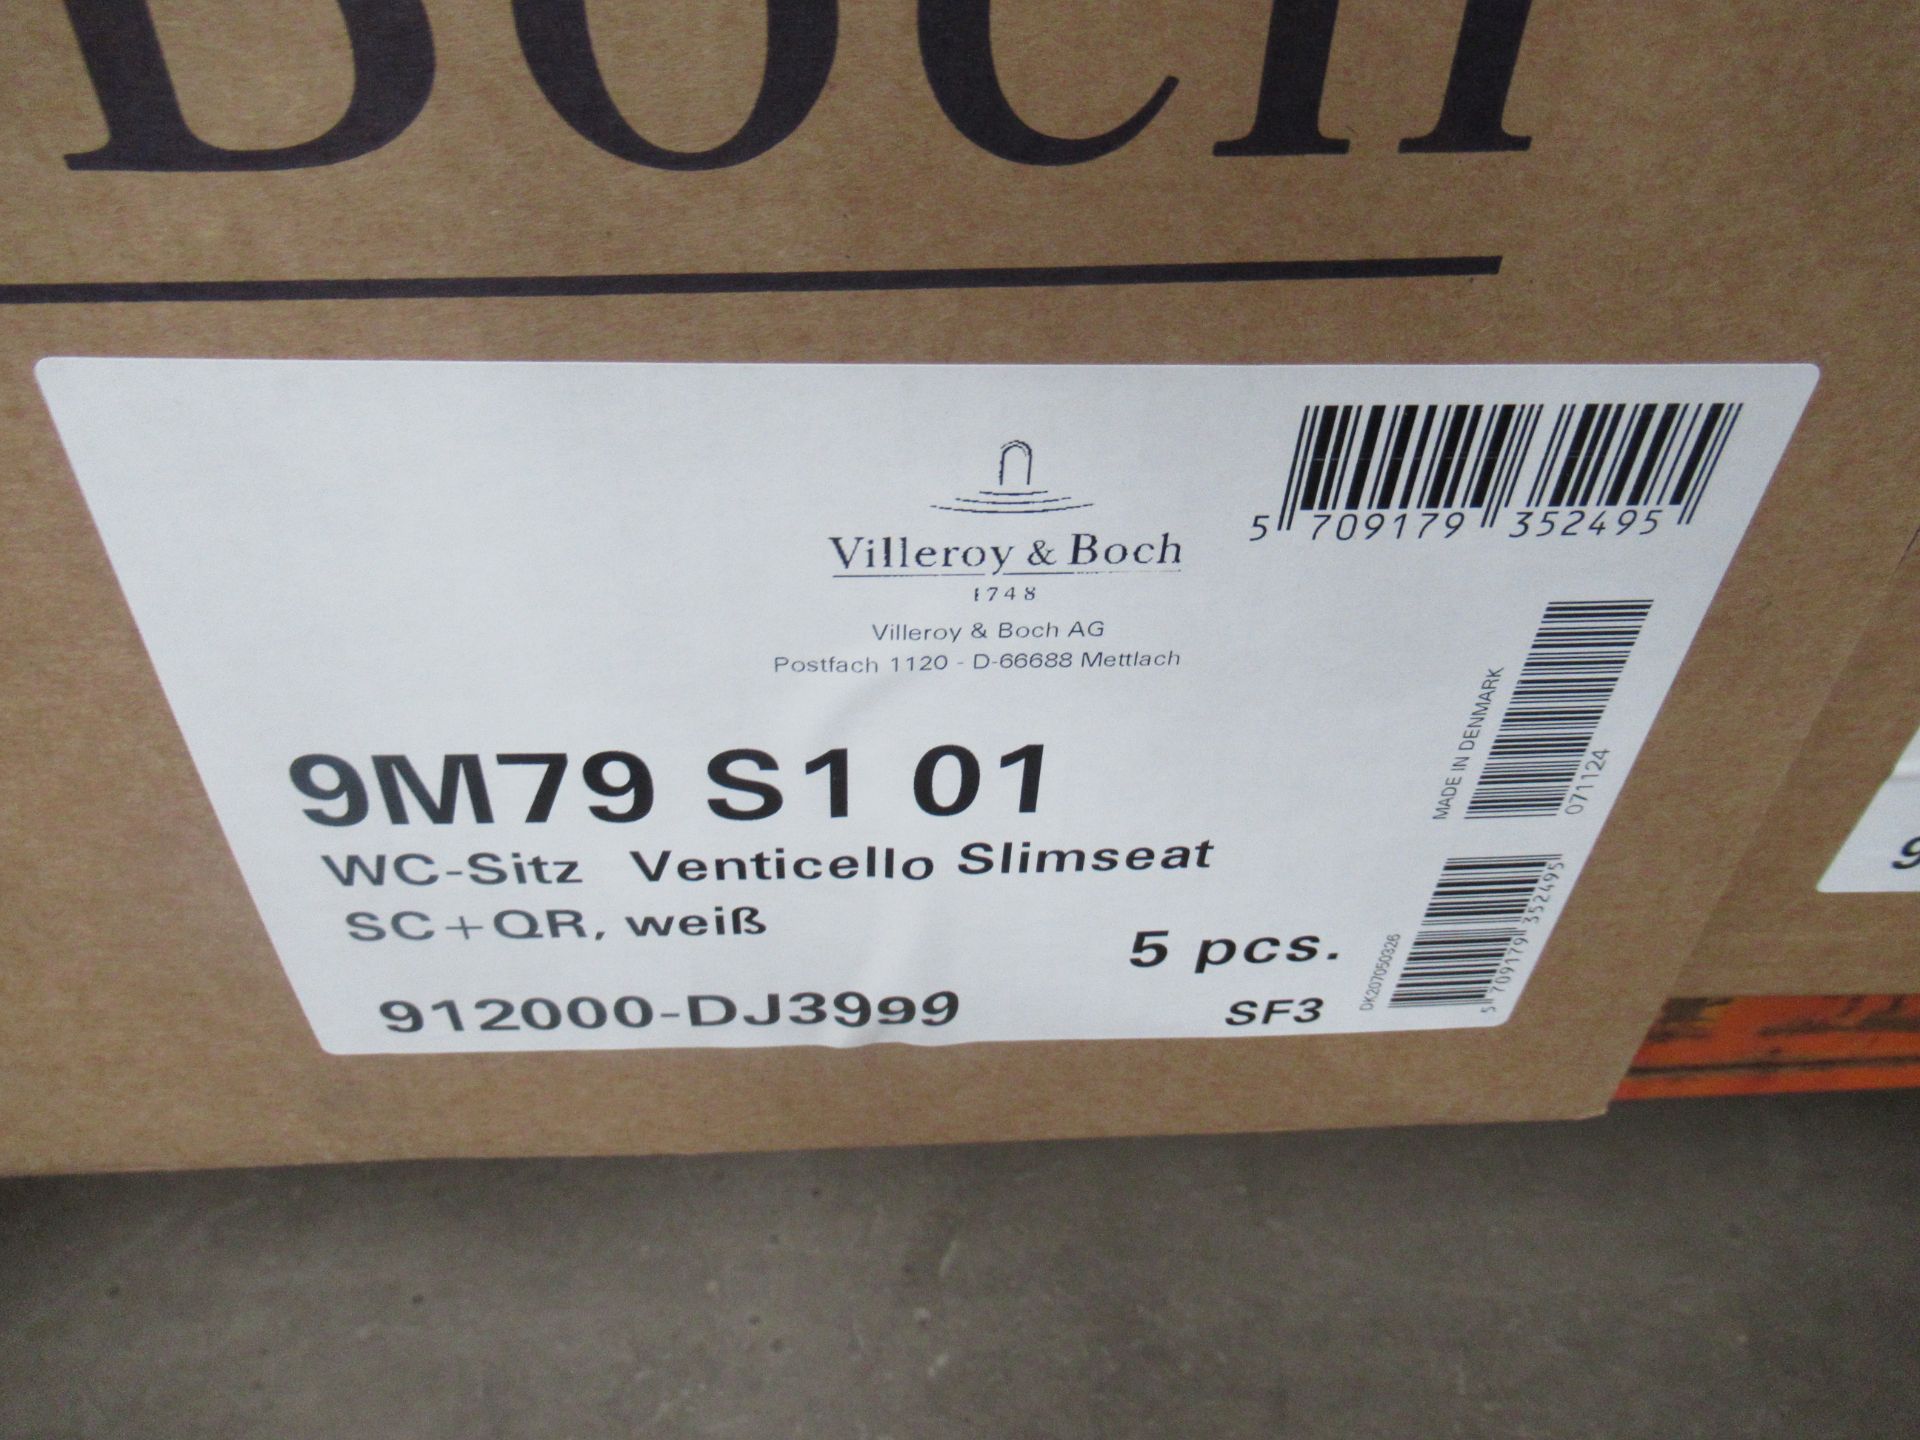 5 x Villeroy and Boch Toilet Seats, w.c-sitz venticello slimseat - Image 3 of 3